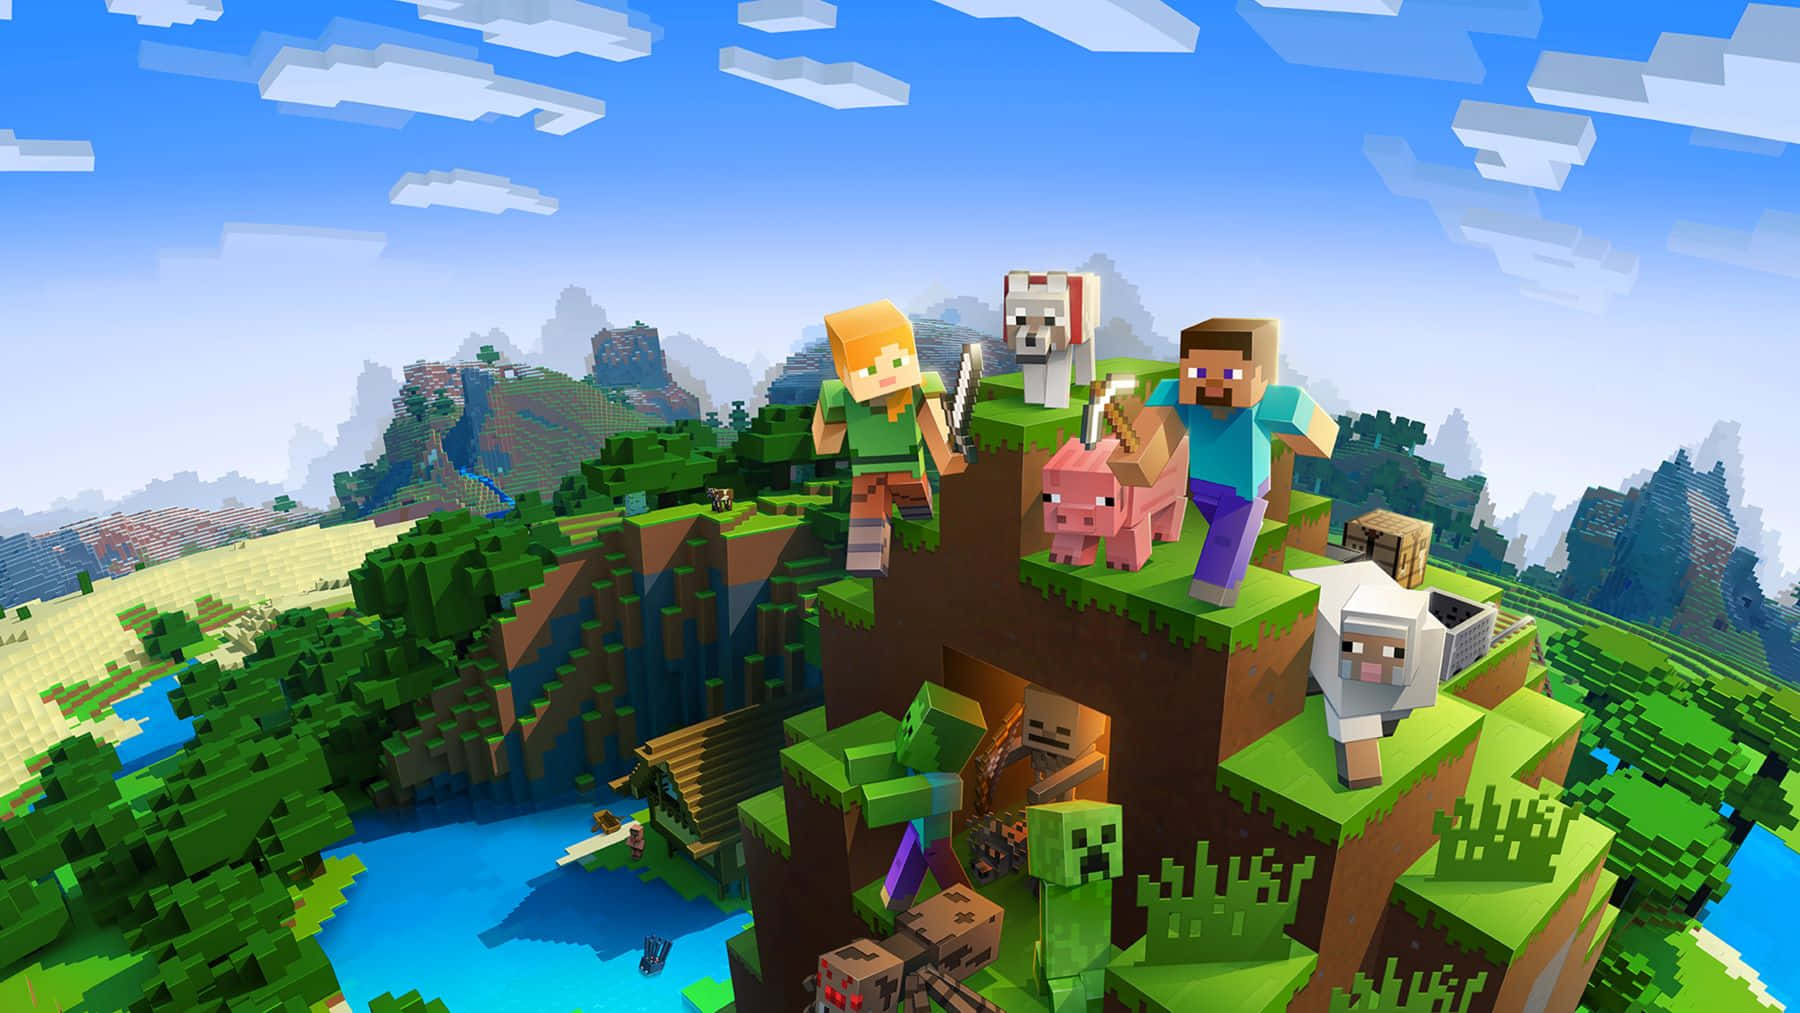 Captivating Minecraft Landscape Wallpaper